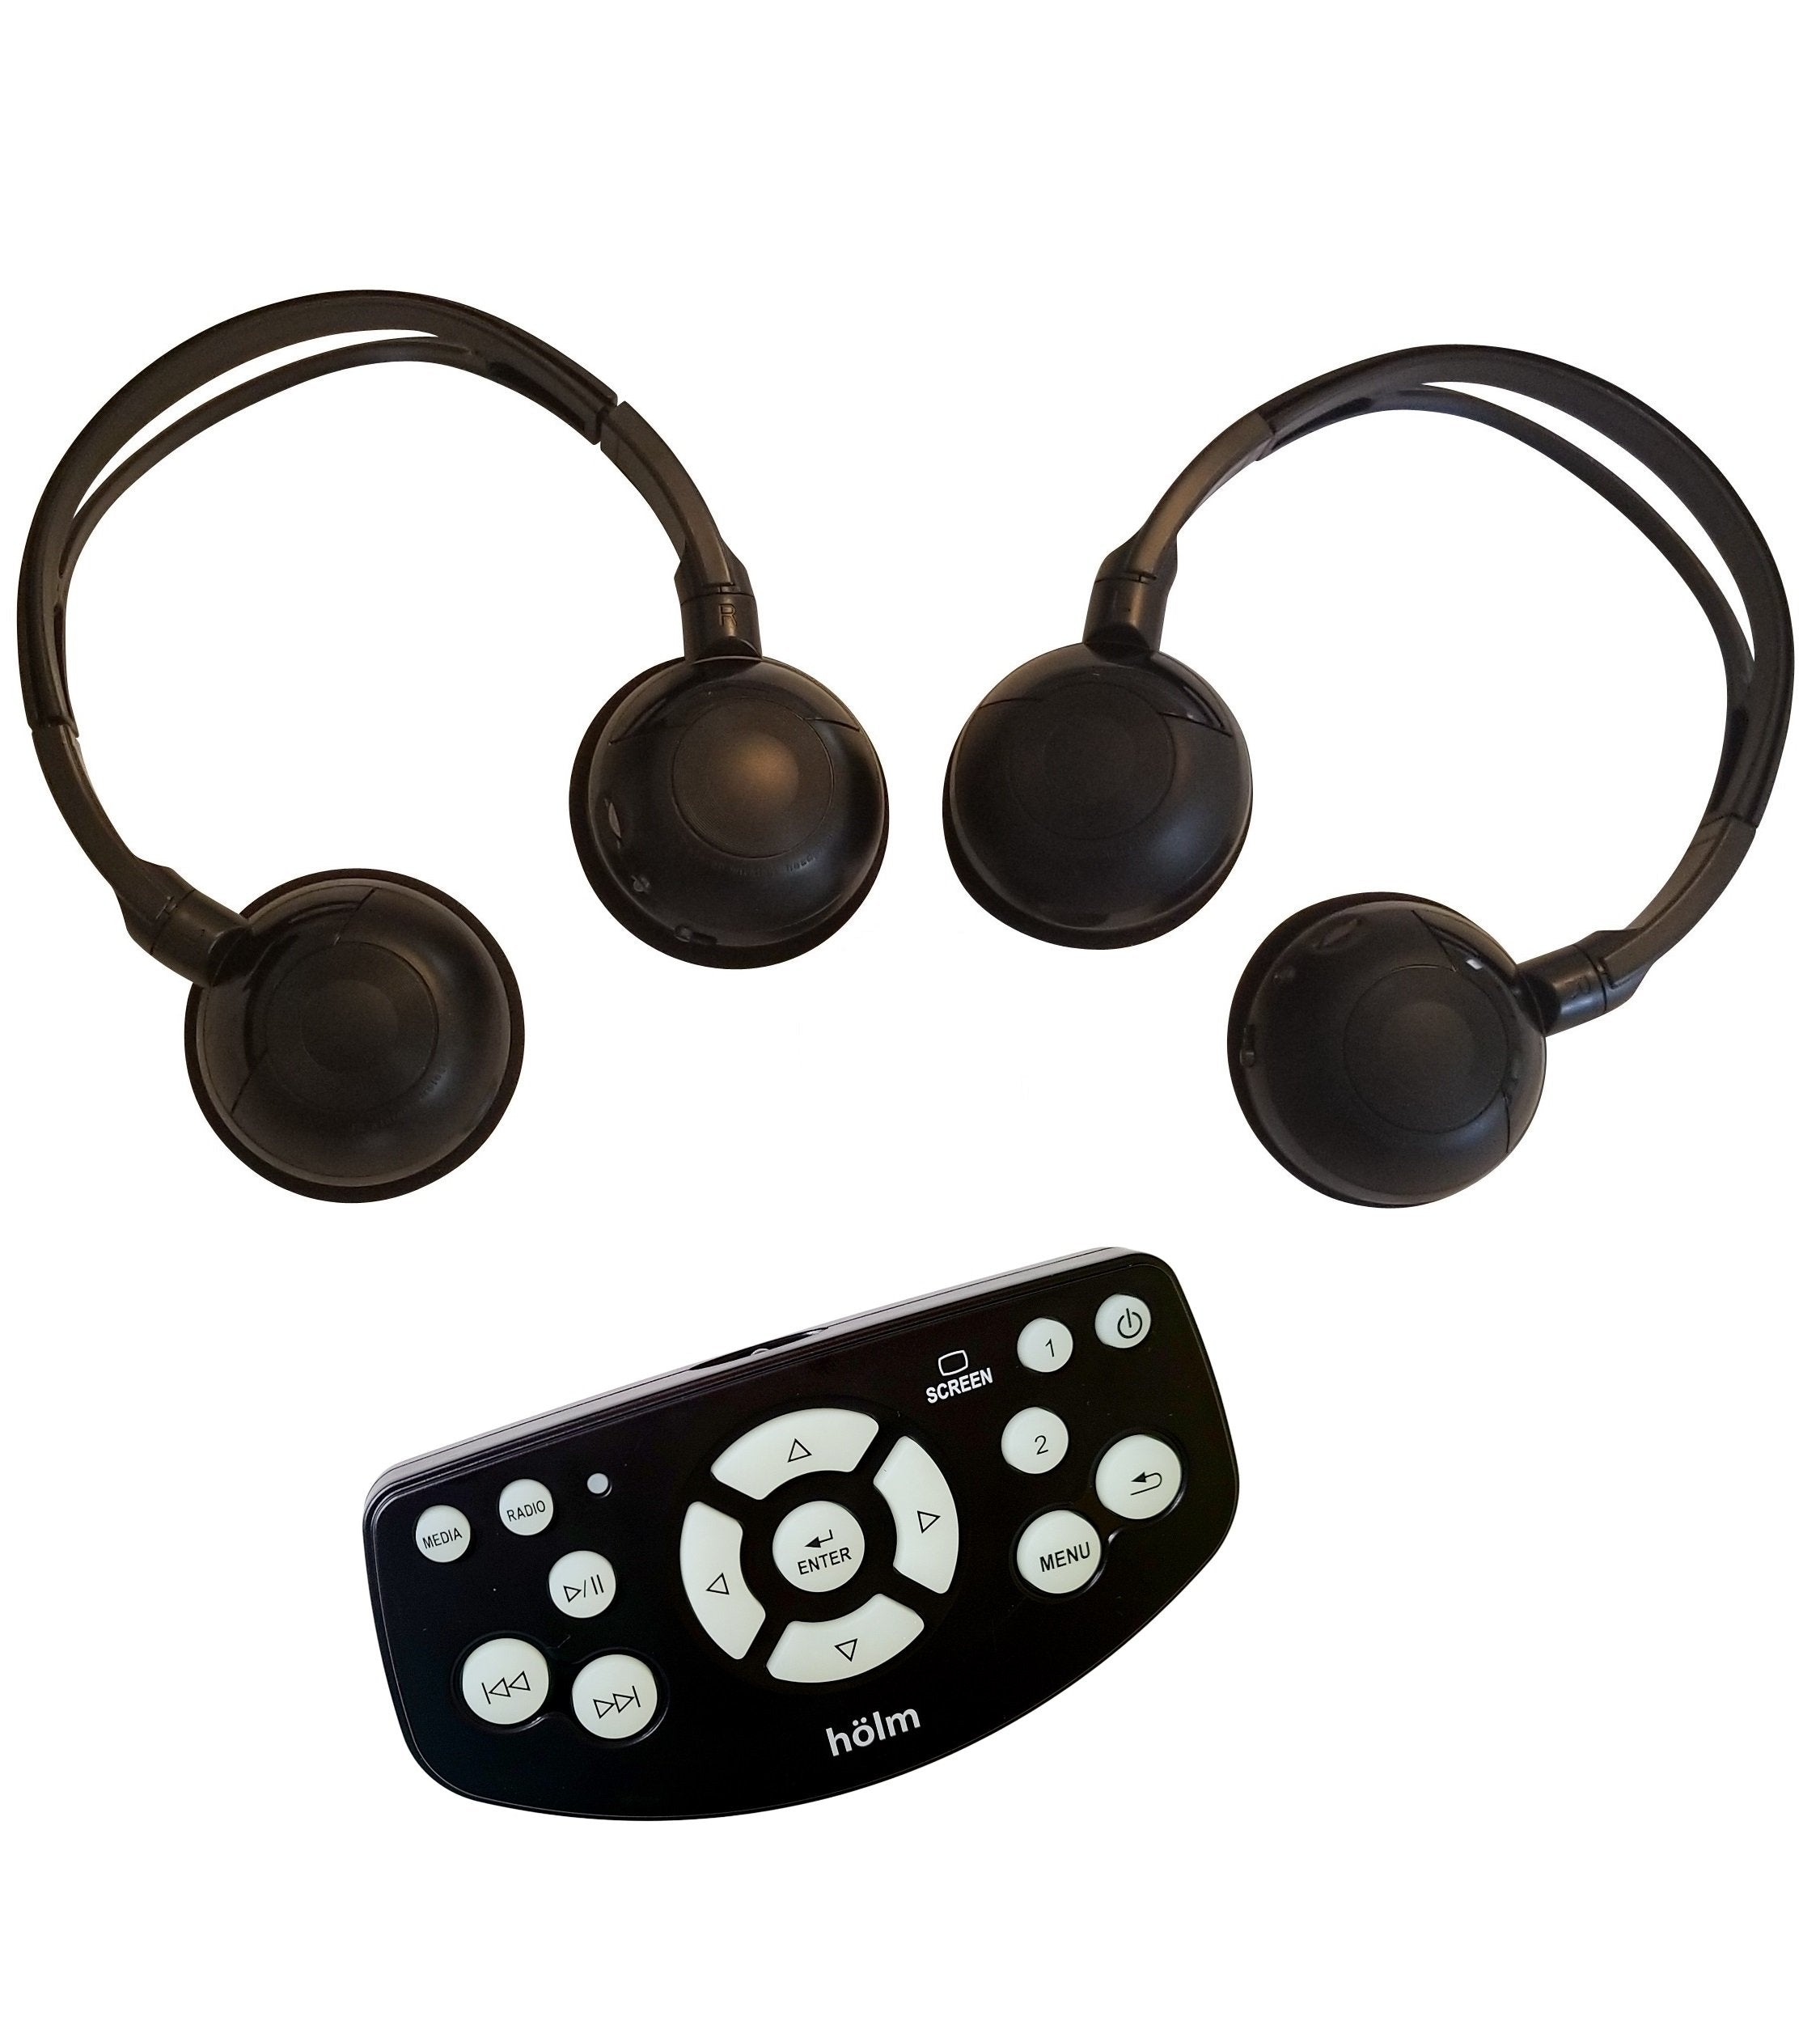 2015 GMC Sierra BluRay DVD Remote And Wireless Headphones